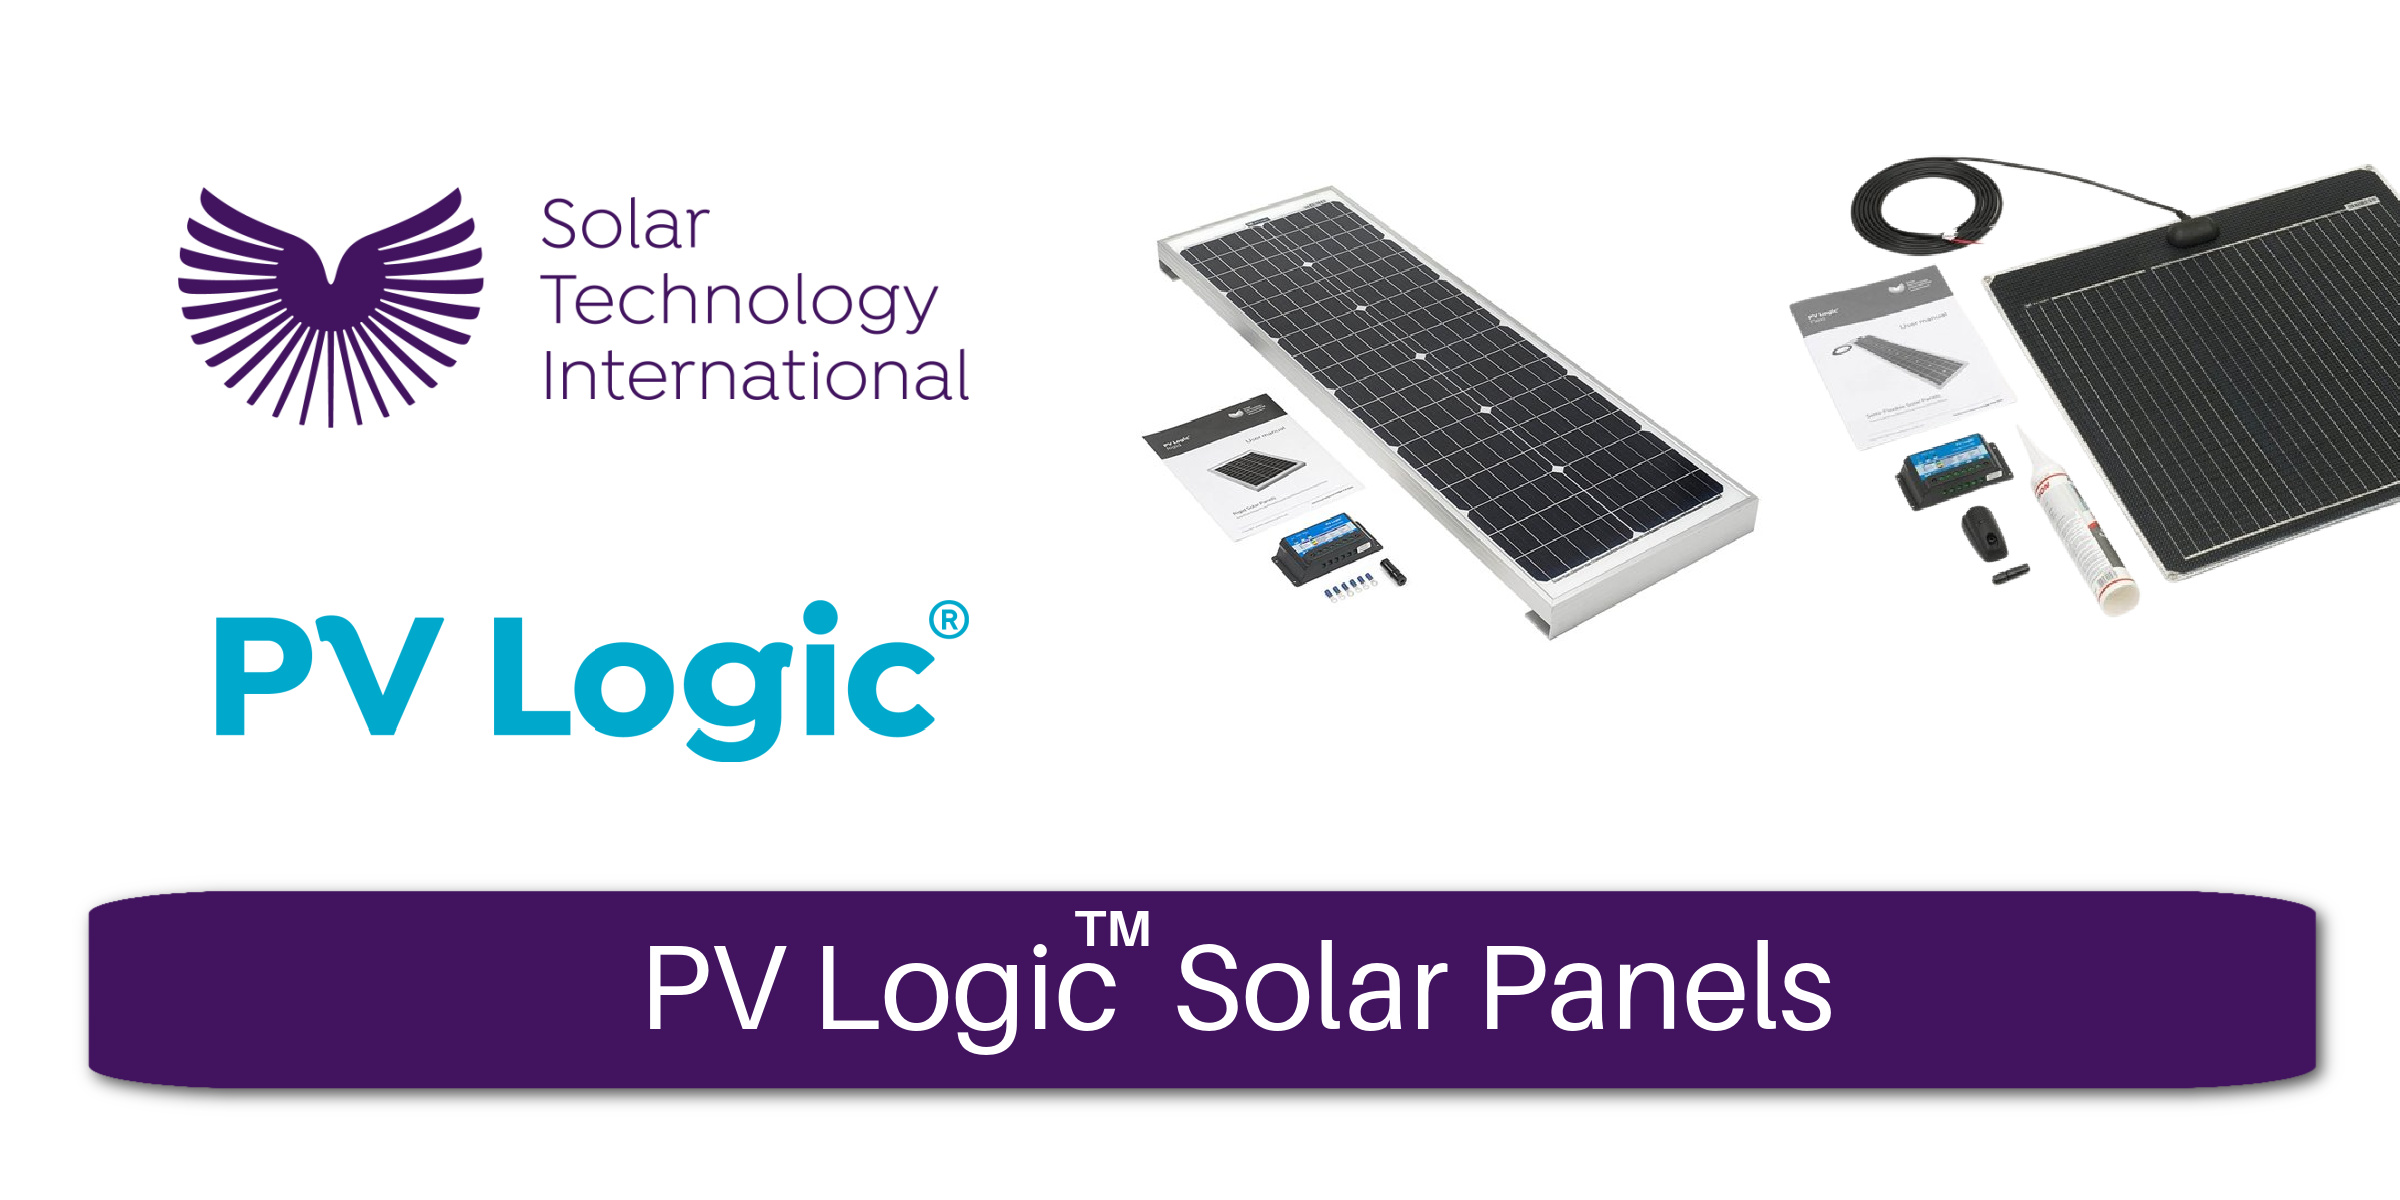 PV Logic Solar Panels Category